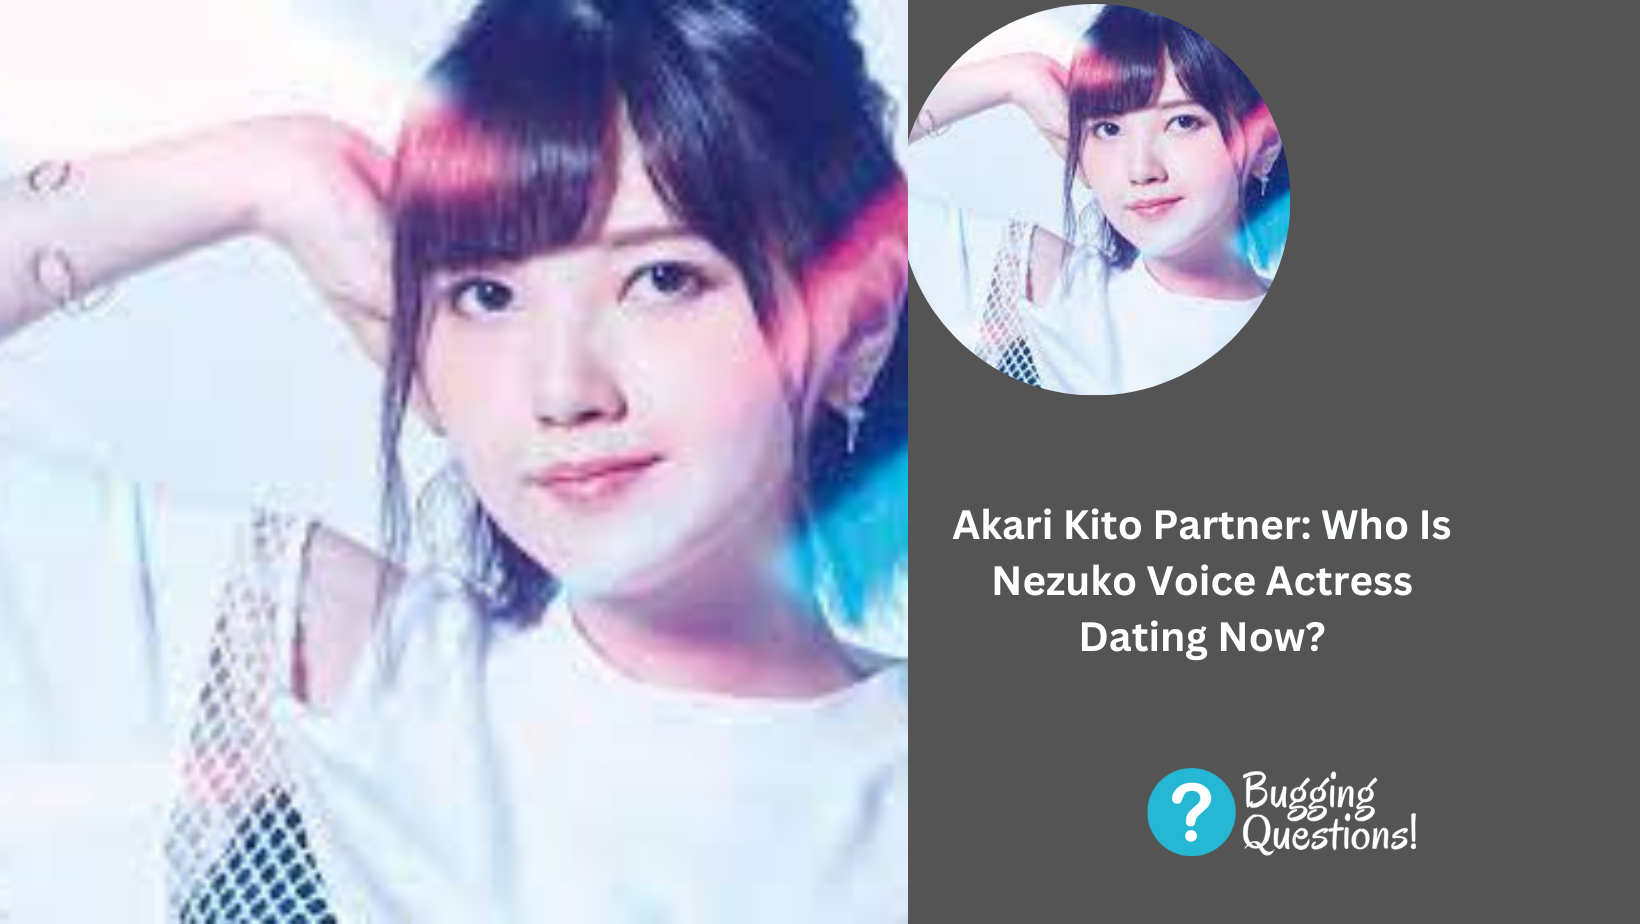 Akari Kito Partner: Who Is Nezuko Voice Actress Dating Now?